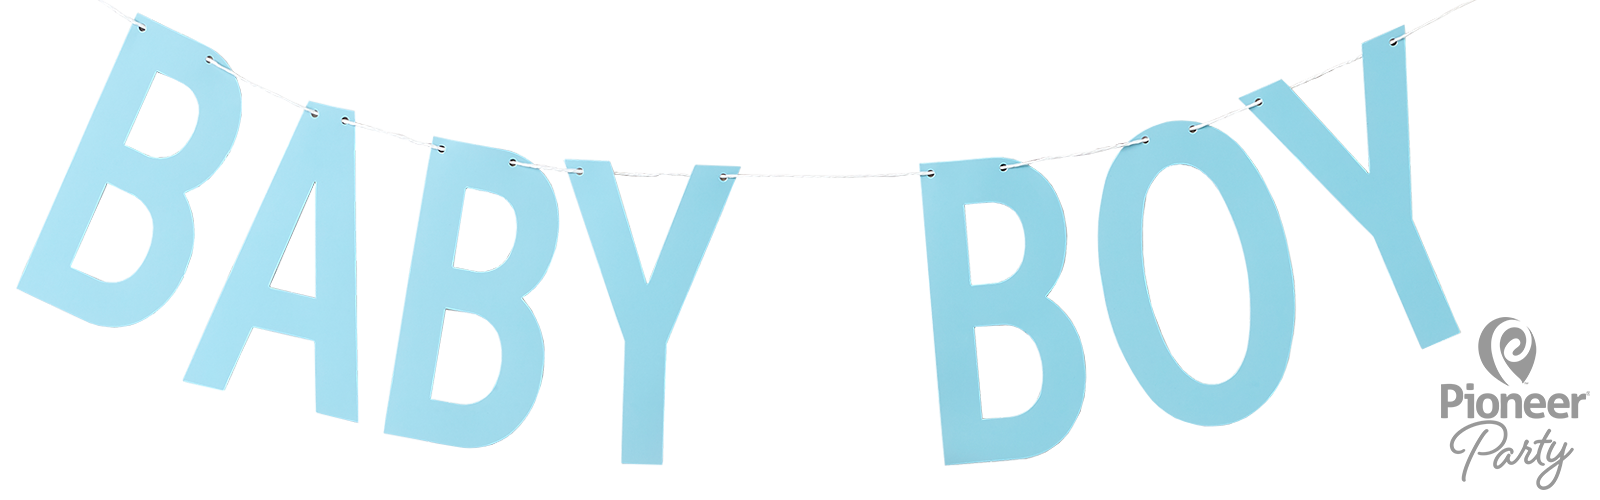 Baby Boy Letter Banner